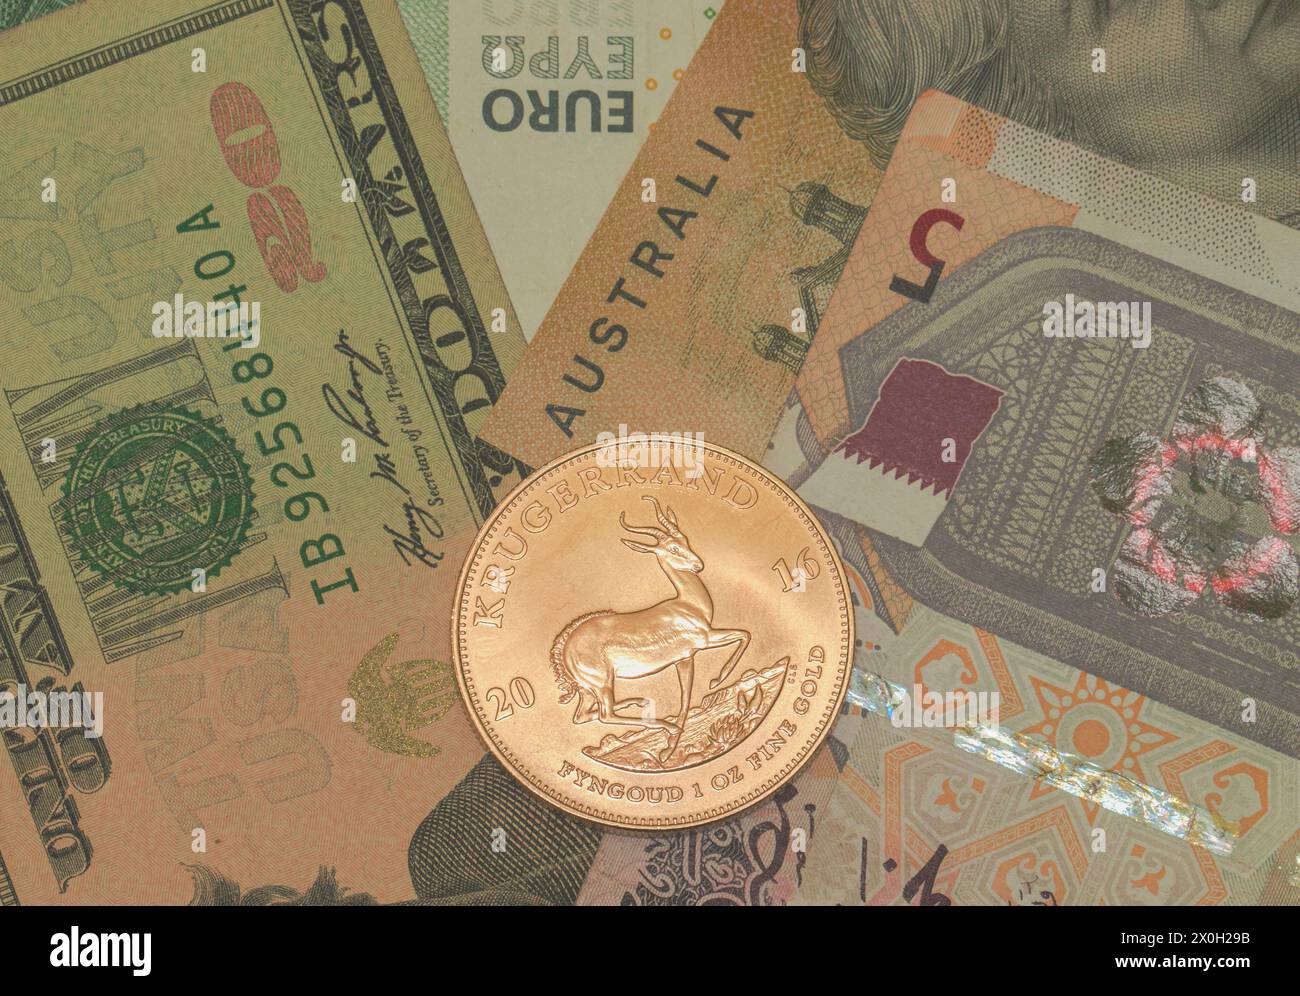 1 oncia originale moneta d'oro Kruger Rand sudafricana da 24 carati contro diverse comuni valute di carta fiat; dollaro, euro, riyal aud; anti-inflazione Foto Stock